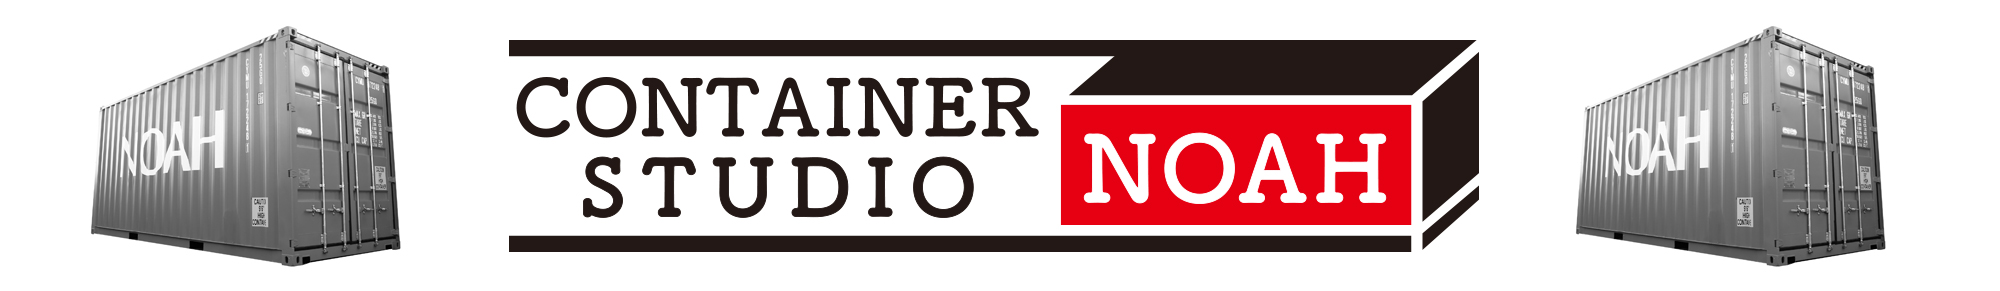 Container Studio NOAH | MUSIC | GAME | AUDIO | RECORDING | PRIVATE STUDIO | コンテナスタジオノア | プライベートスタジオ